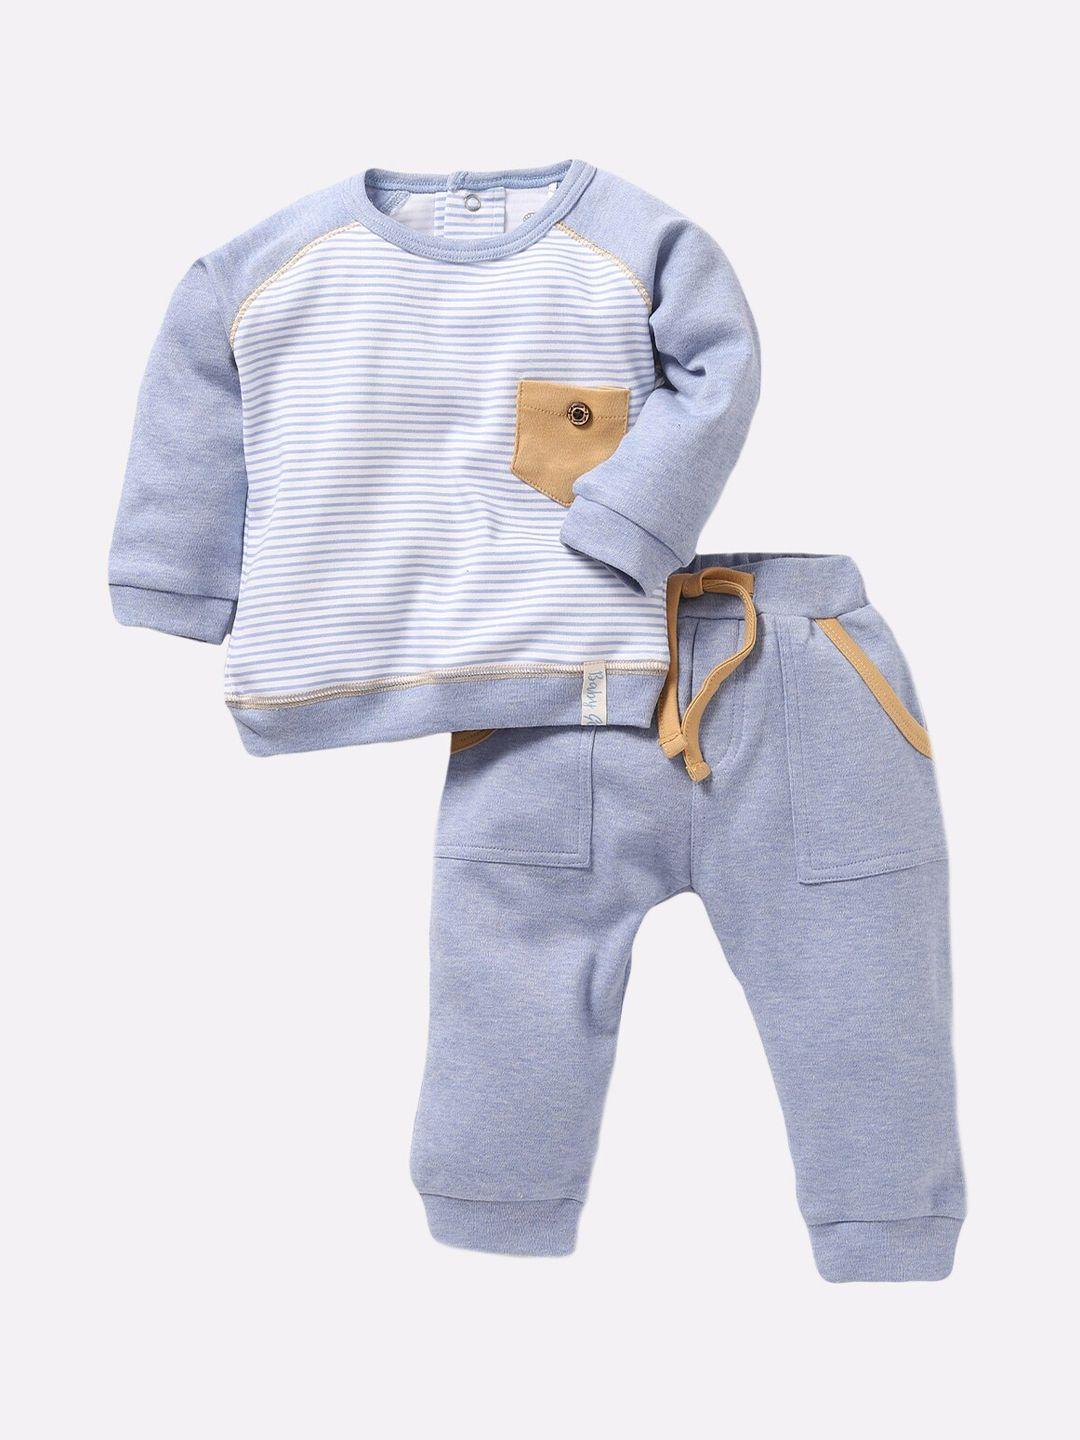 baby go boys blue & white printed clothing set